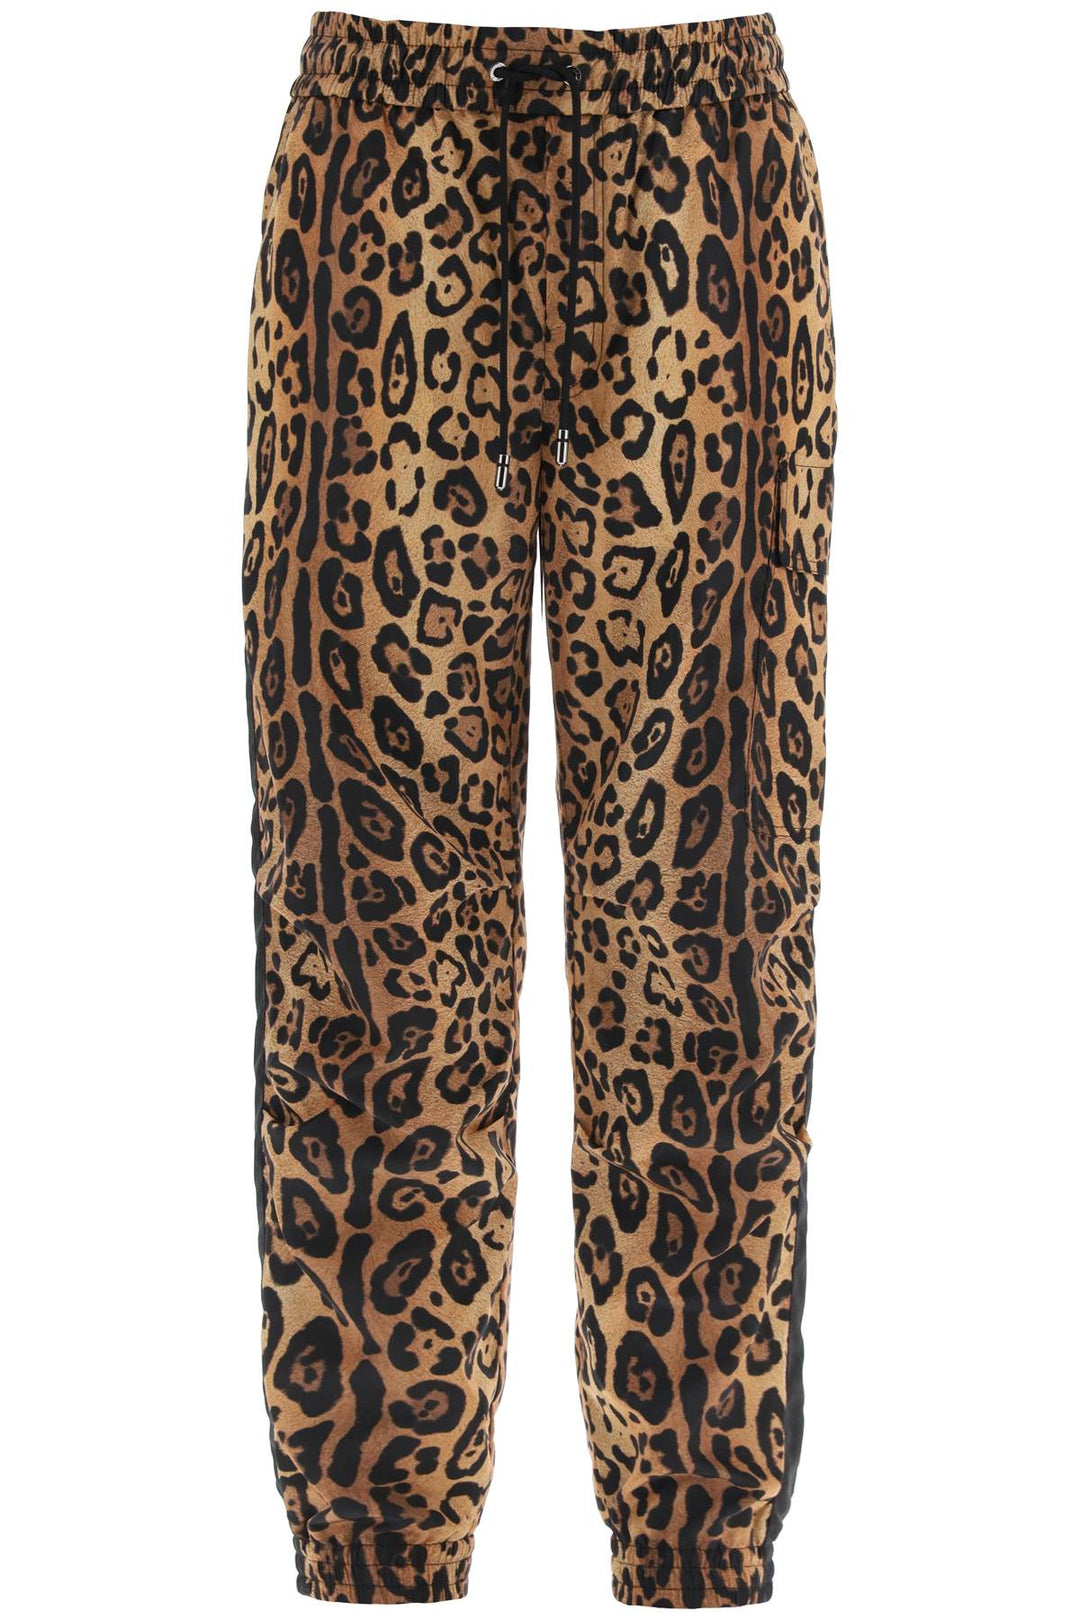 Dolce & gabbana leopard print nylon jogger pants for-0